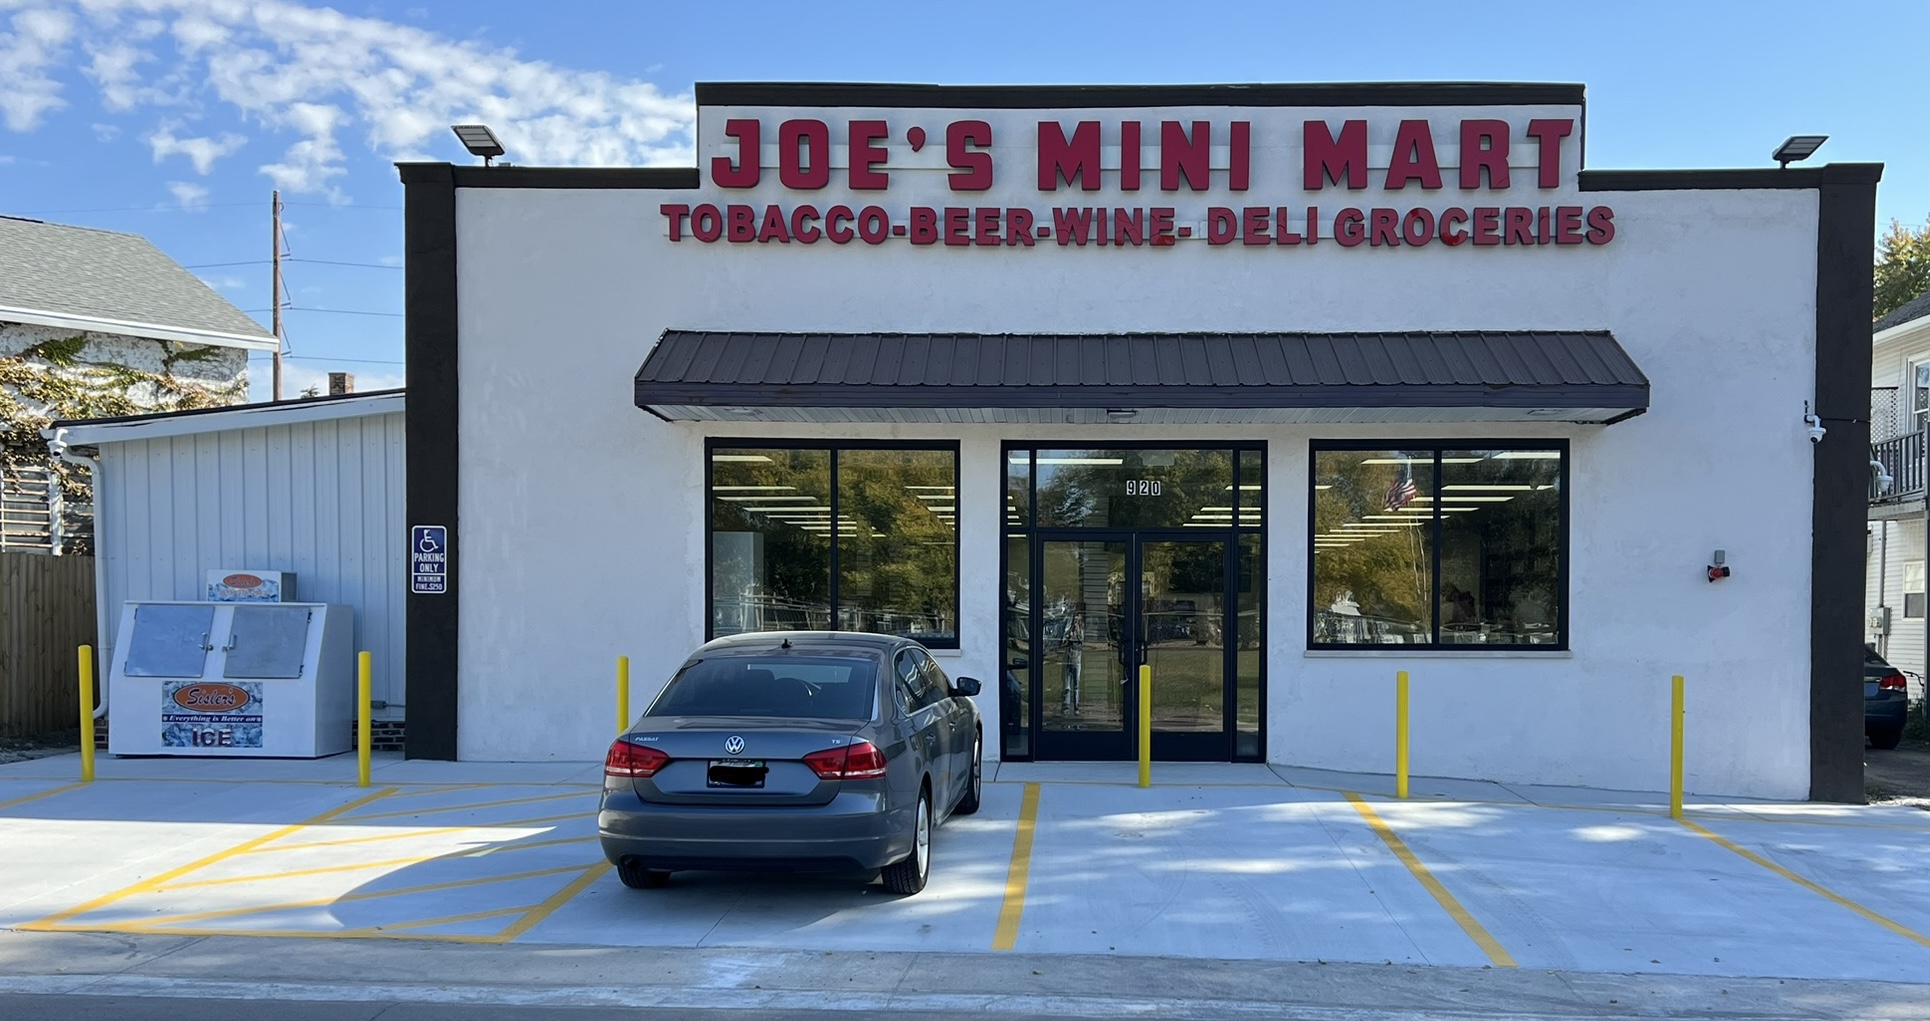 Joe’s Mini Mart